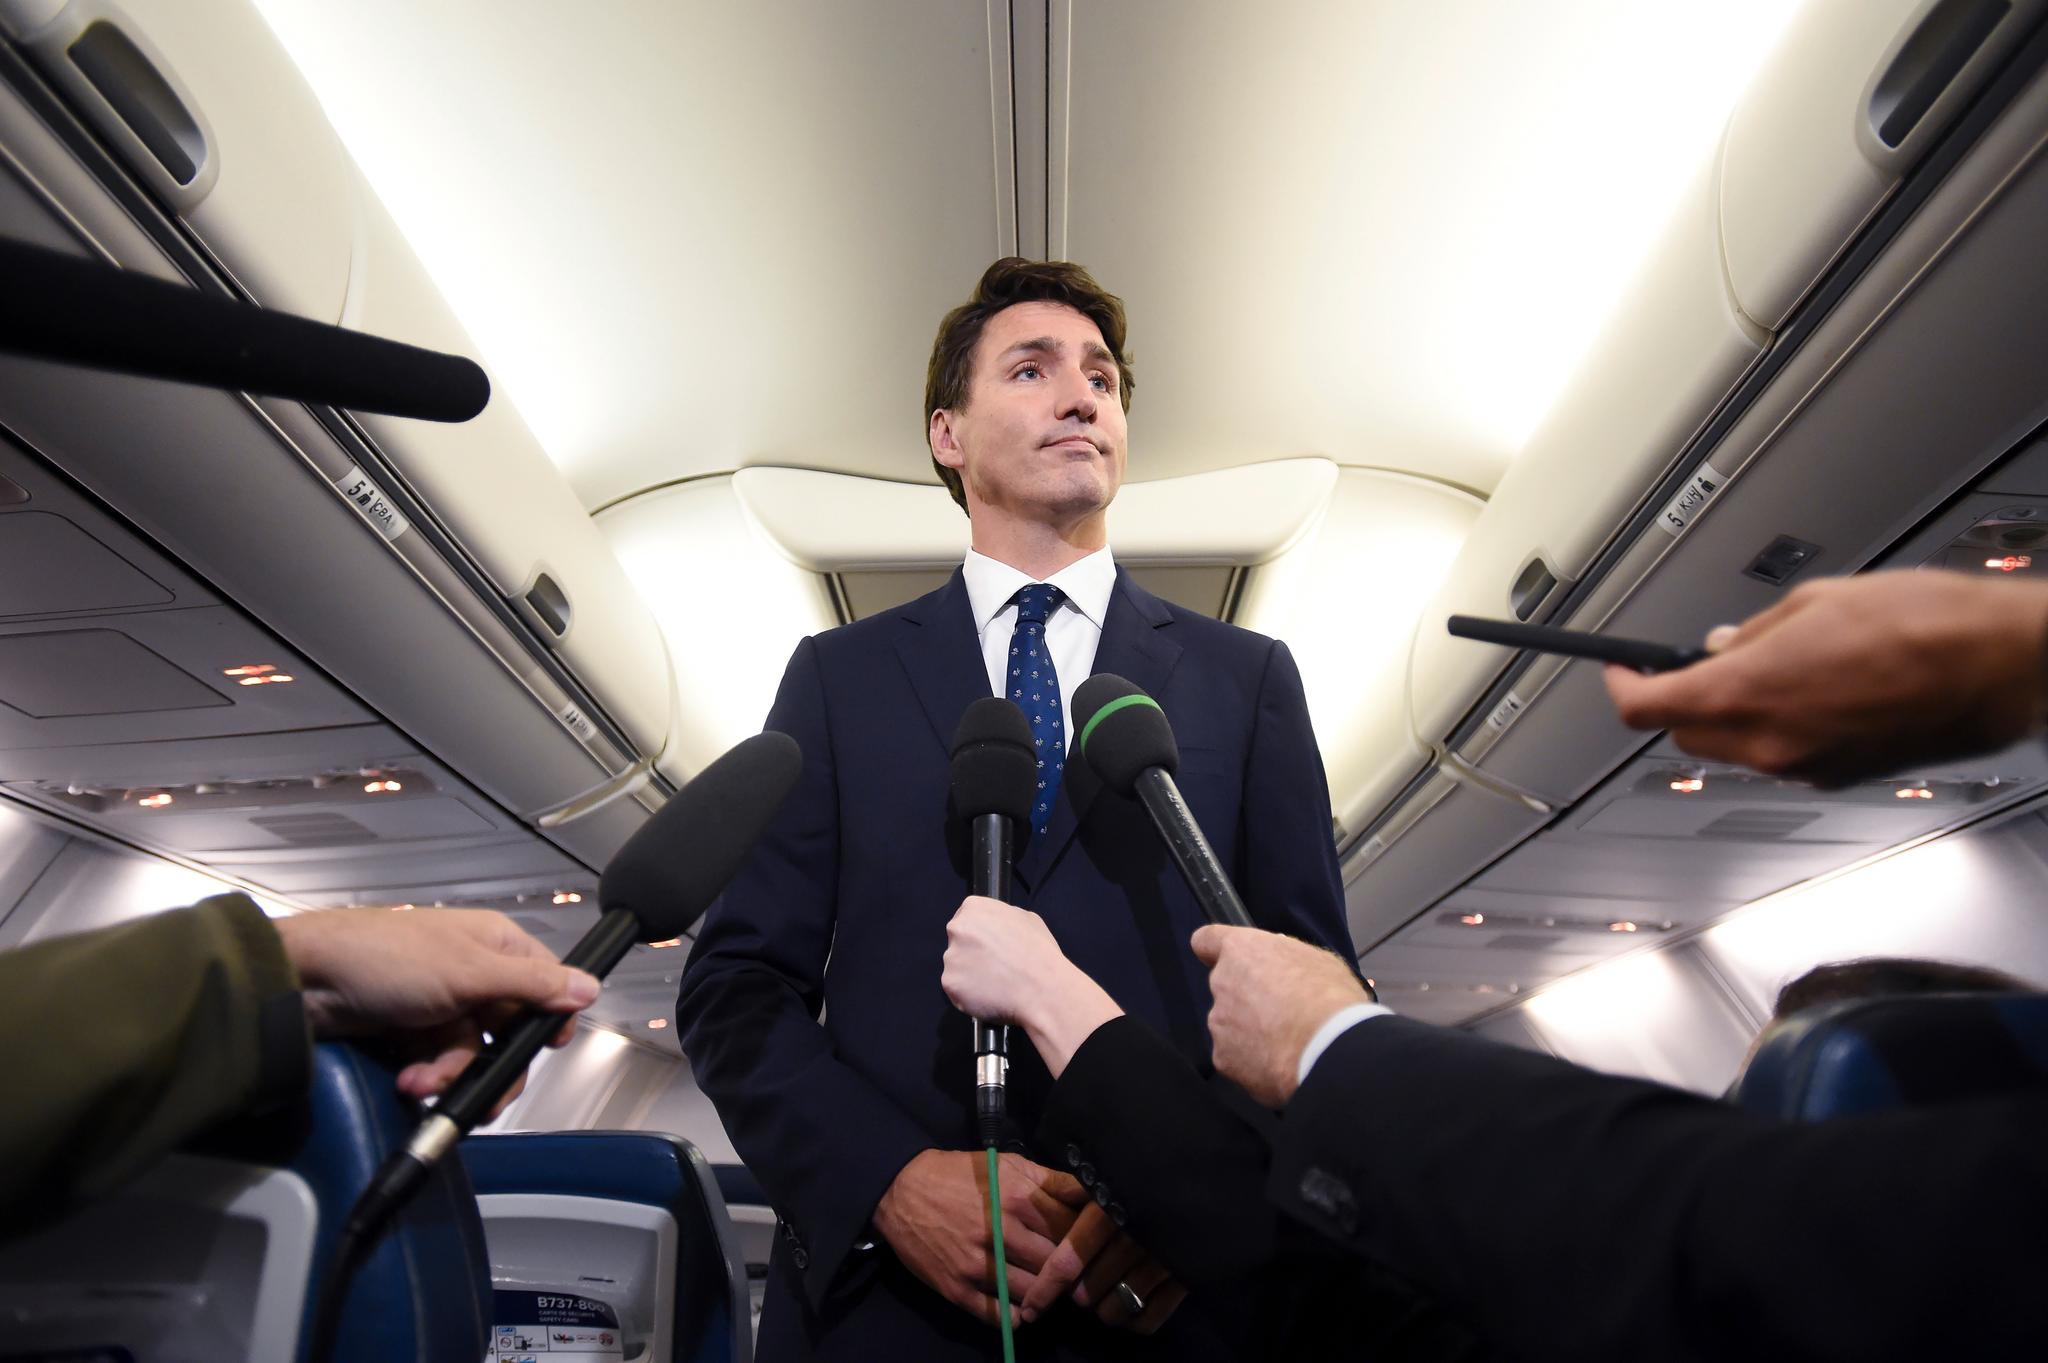 Canadas statsminister Justin Trudeau snakket til journalister i forbindelse med Times' nyhet om at han sminket ansiktet sitt svart i forbindelse med en temafest i 2001. 